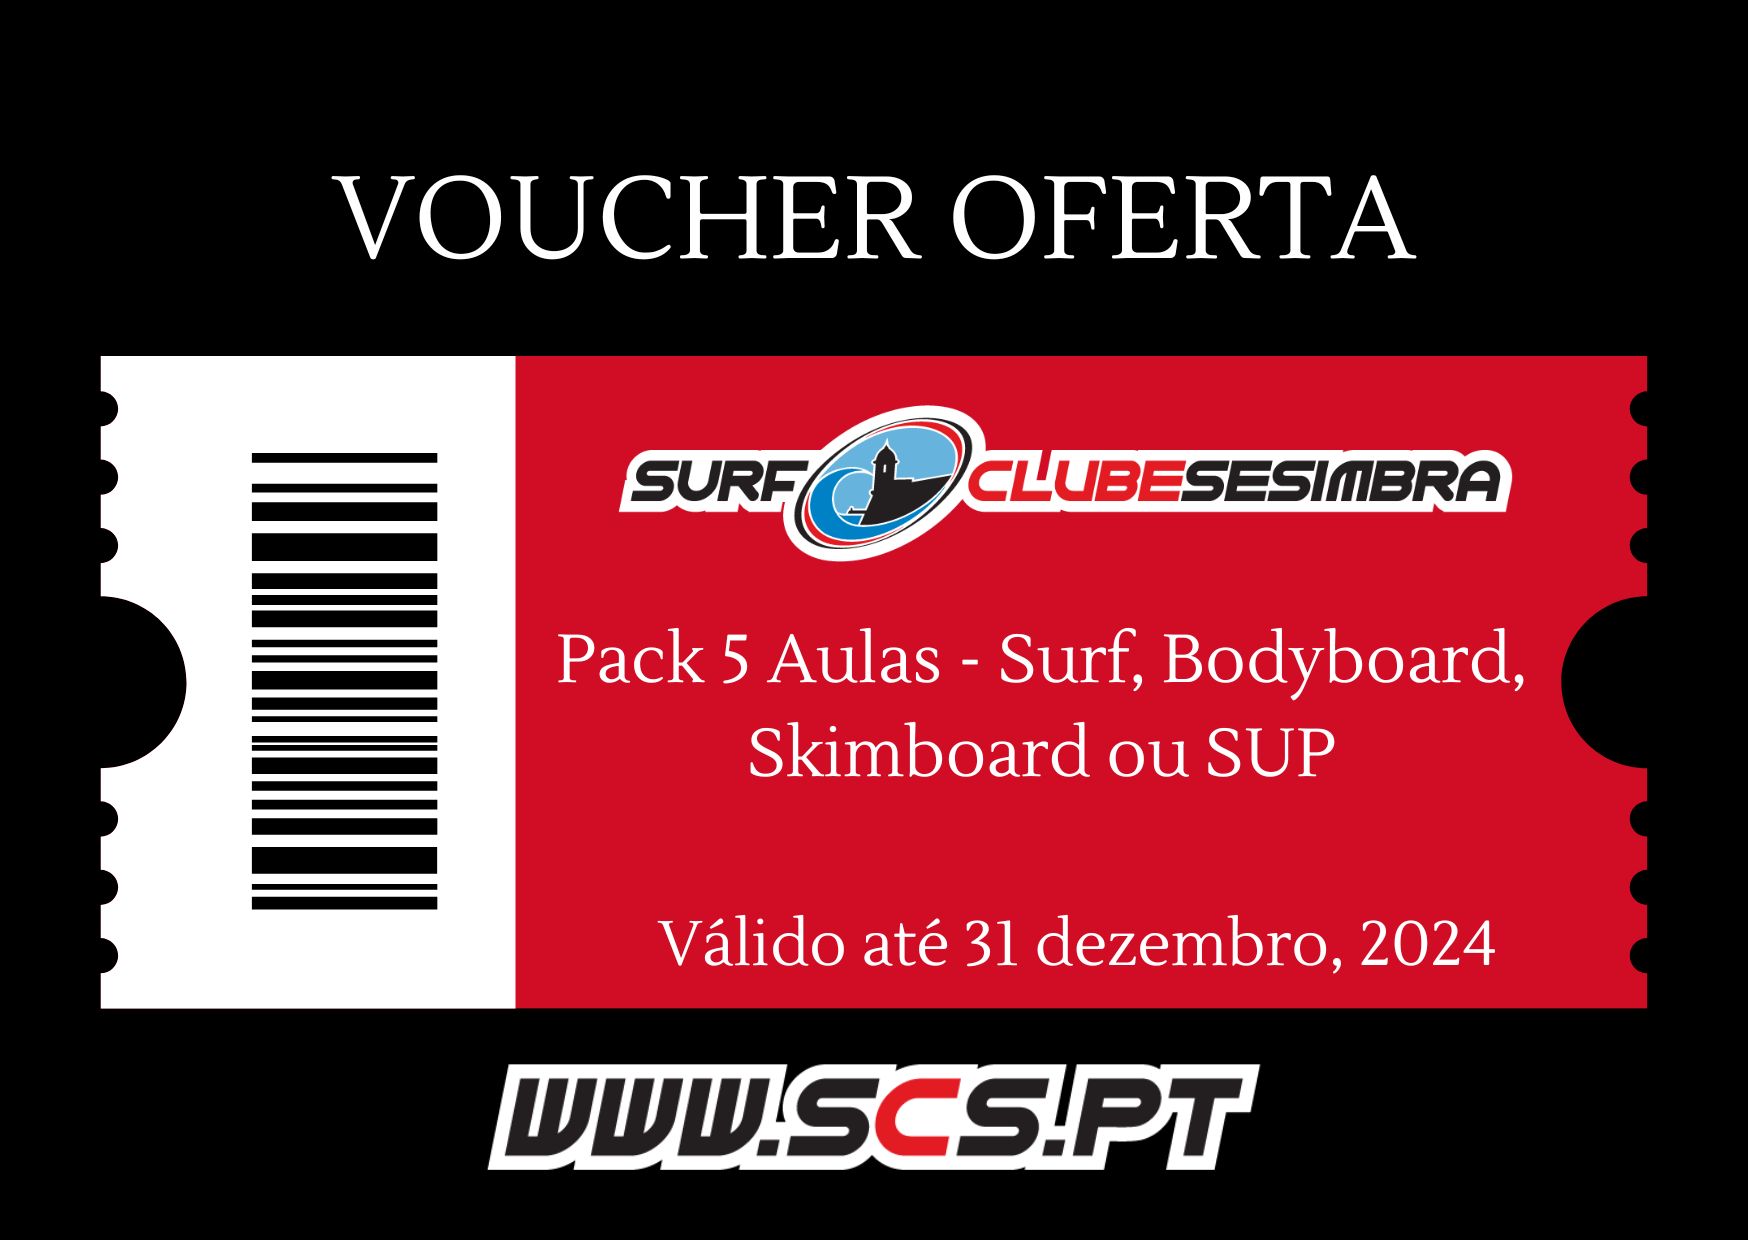 Voucher Oferta Pack 5 Aulas - Surf, Bodyboard, Skimboard ou SUP